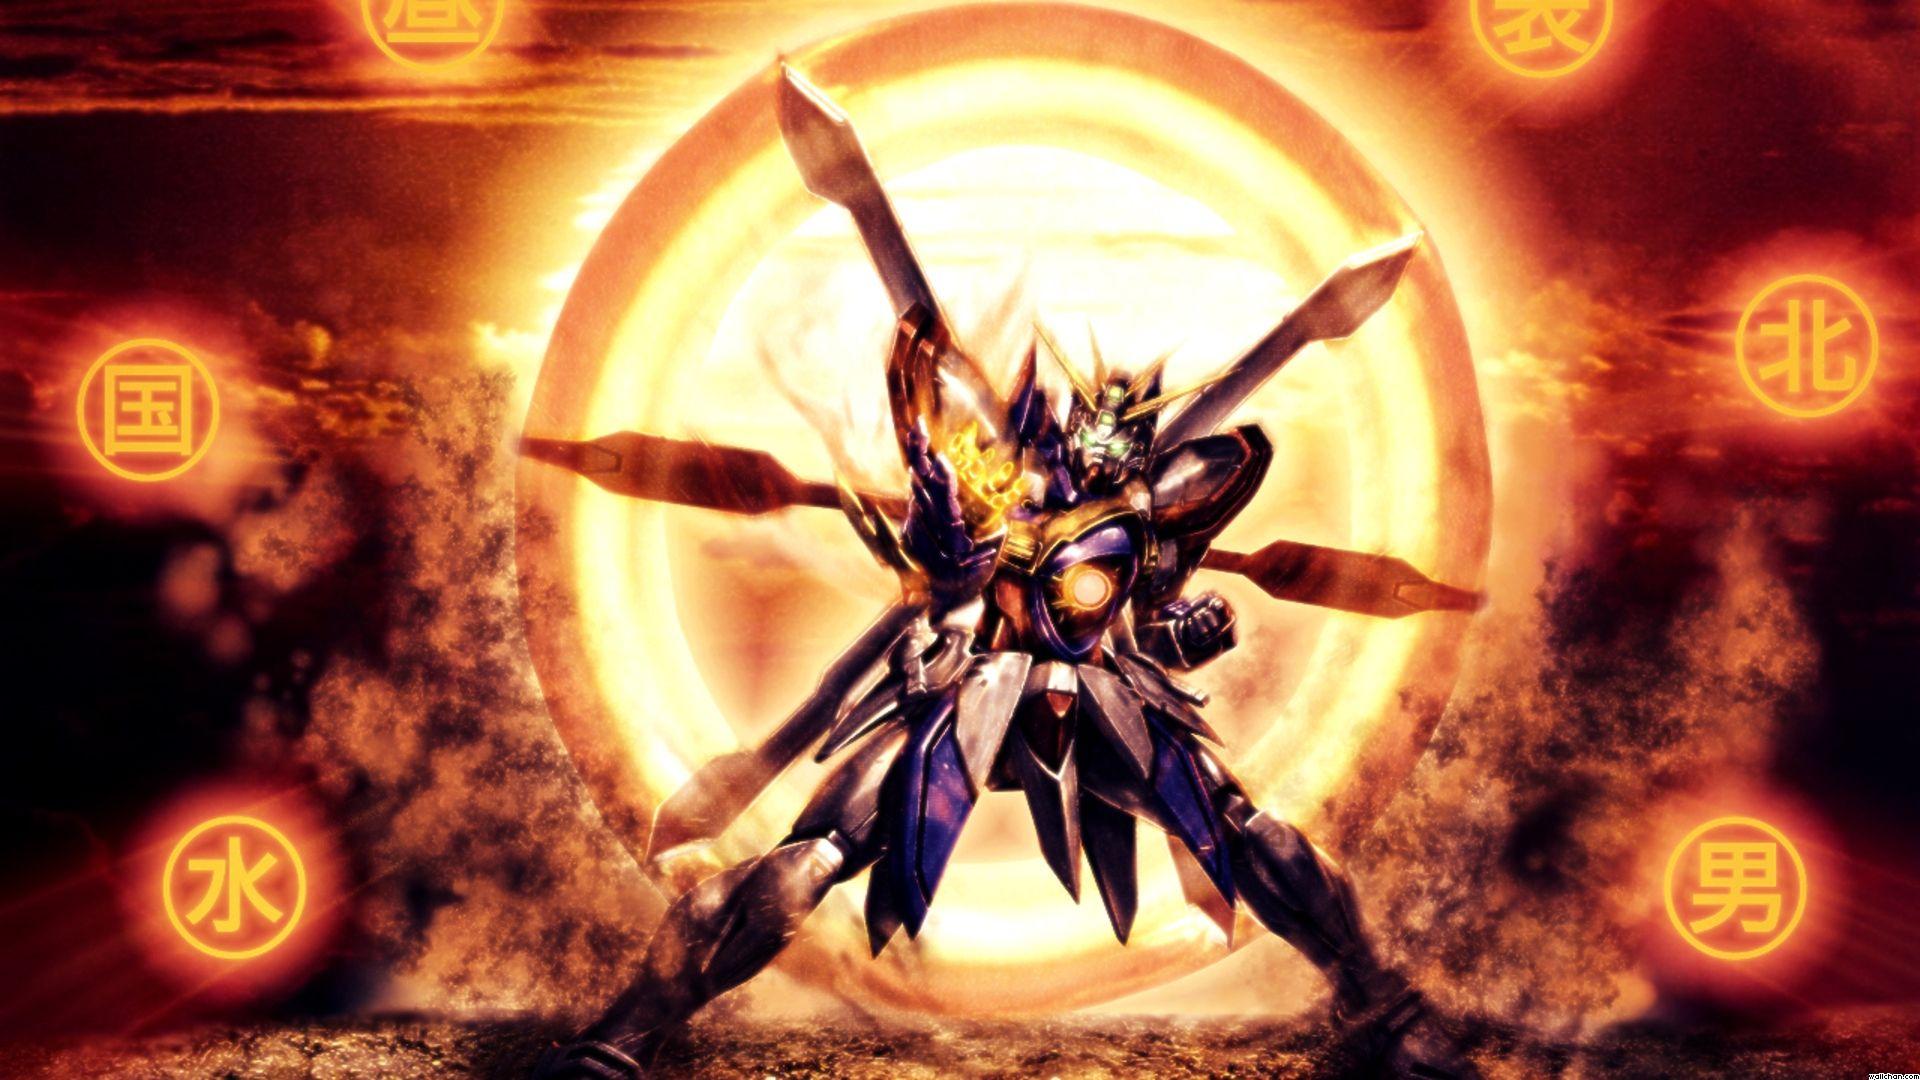 Gundam Wallpaper, Gundam Photo for Desktop Handpicked Gundam